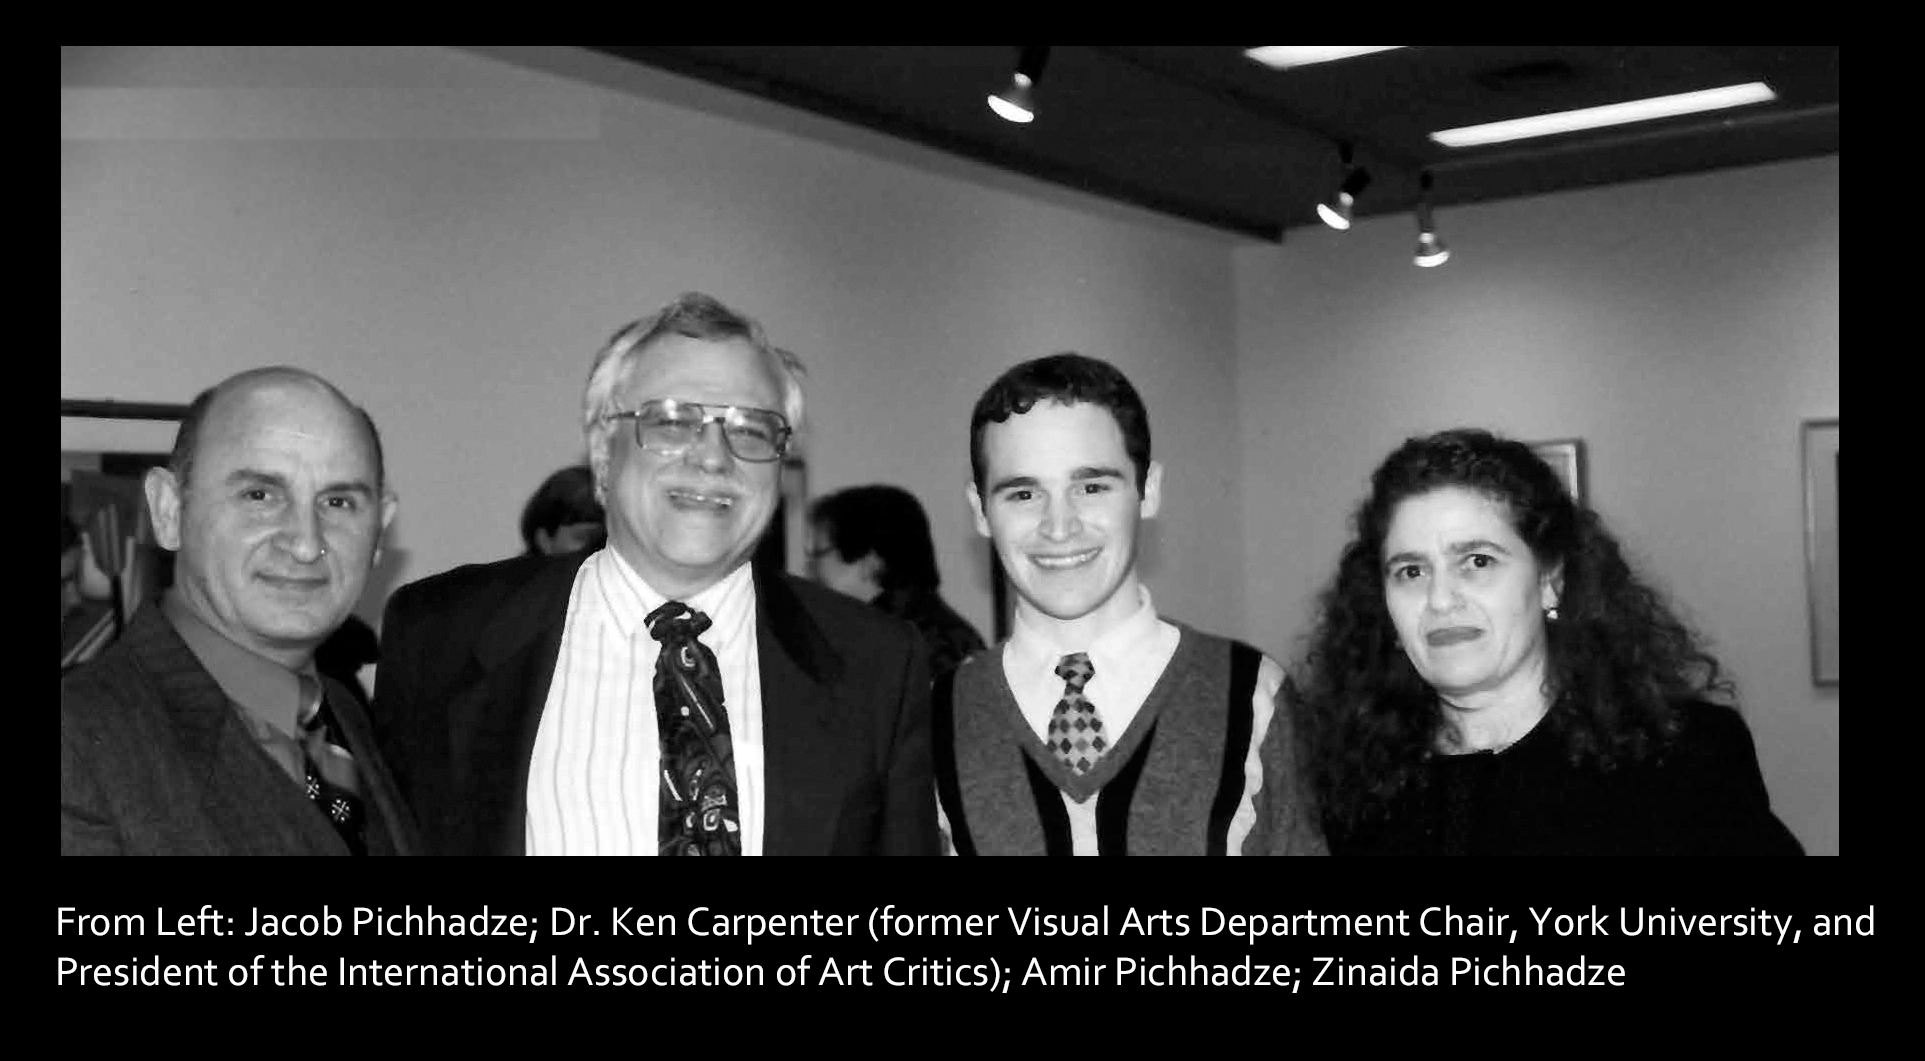 Fundraising Art Exhibition at York University. From Left: Jacob Pichhadze; Dr. Ken Carpenter (former Visual Arts Department Chair, York University, and President of the International Association of Art Critics; Amir Pichhadze; Zinaida Pichhadze